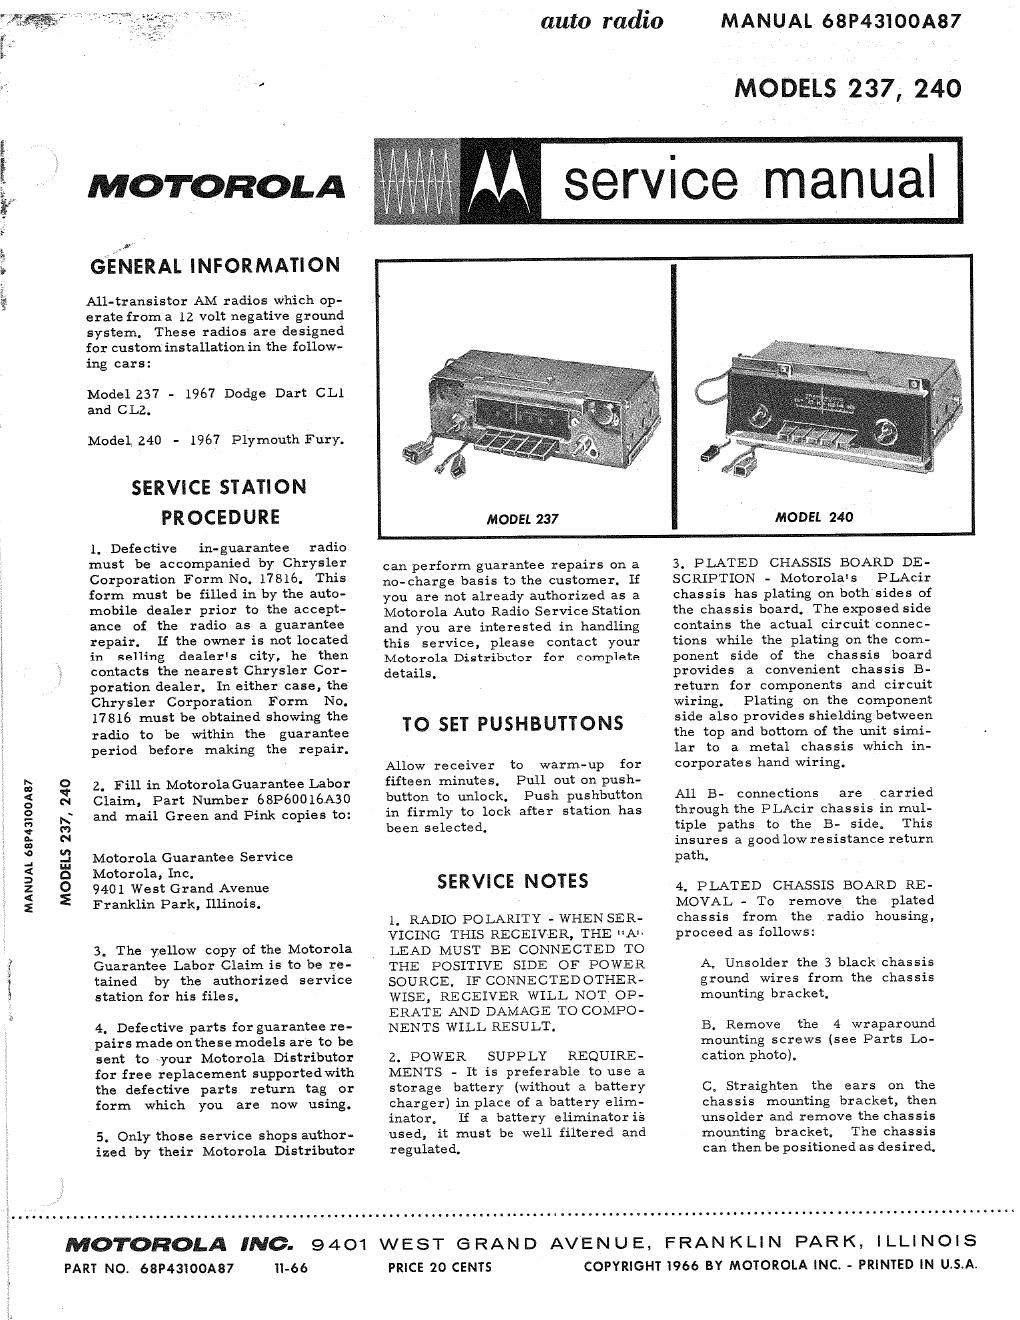 motorola 237 service manual